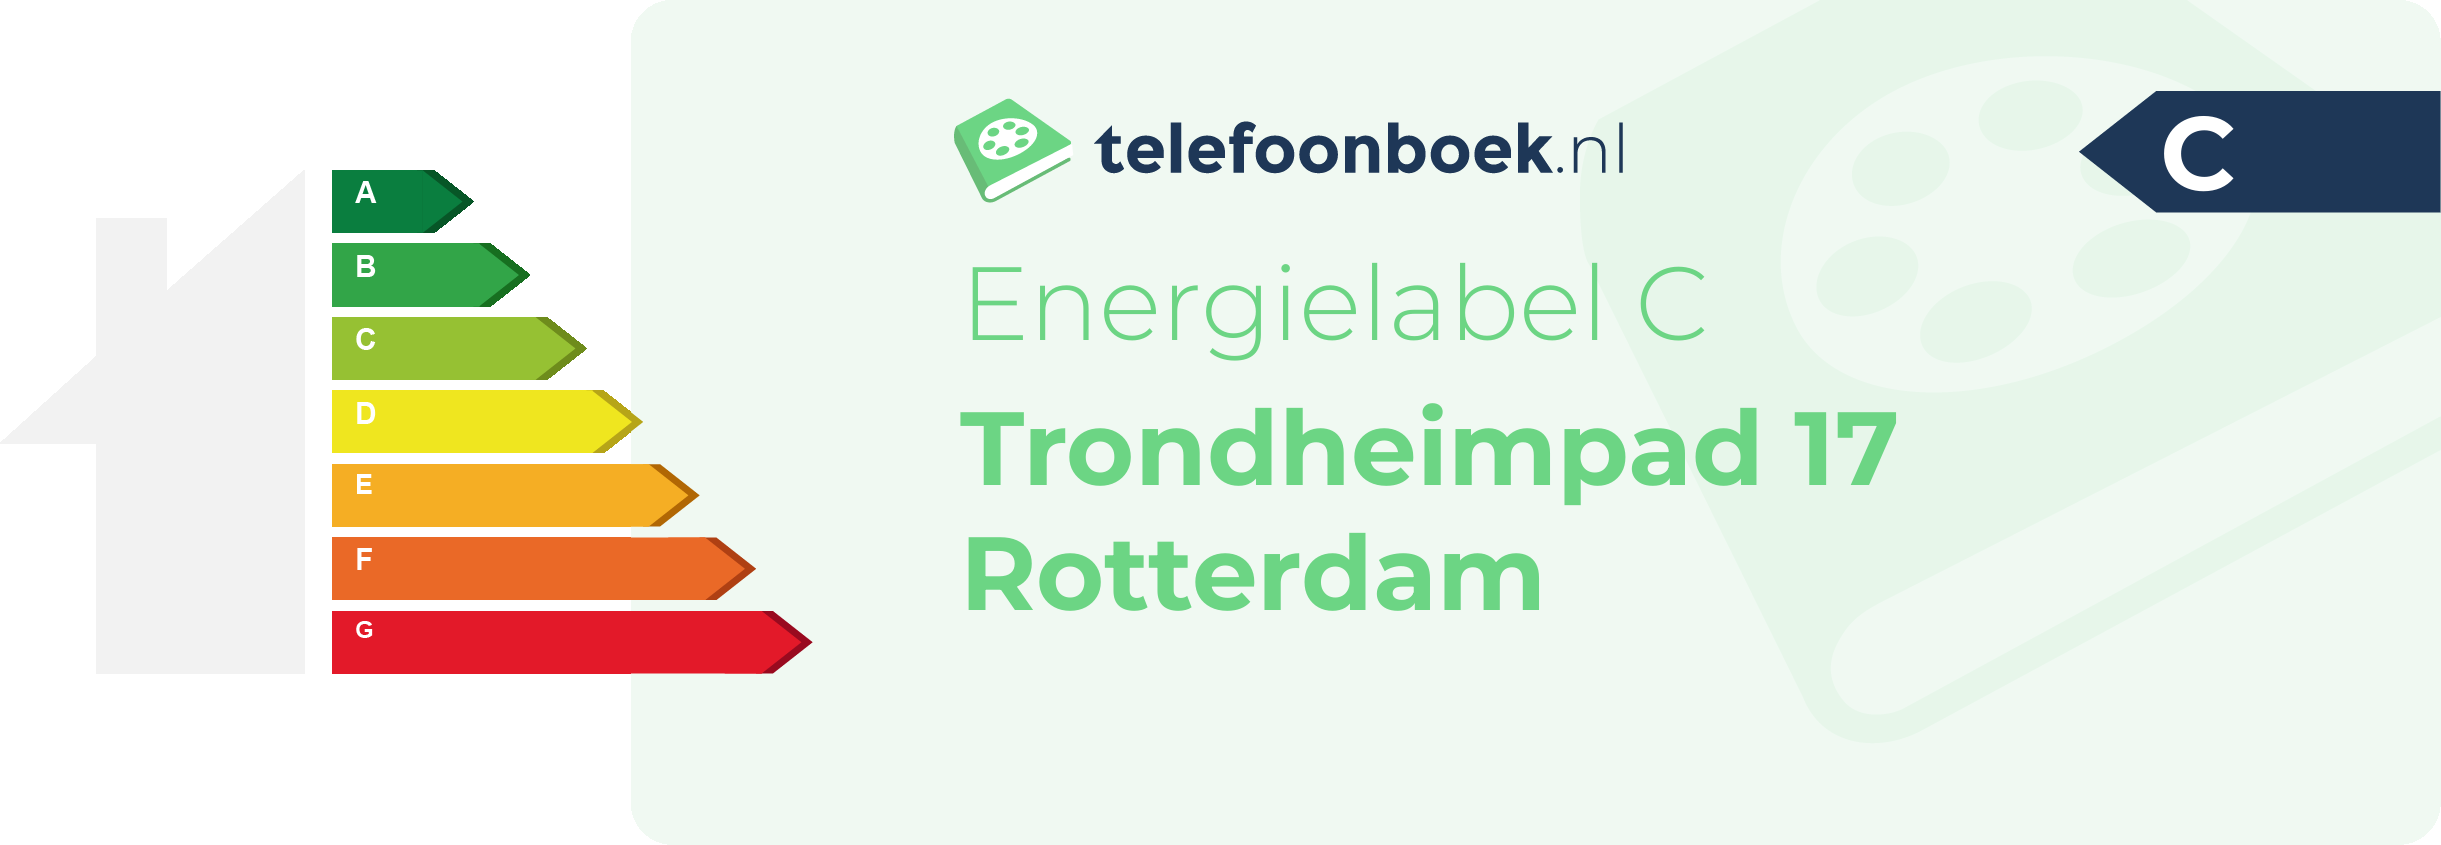 Energielabel Trondheimpad 17 Rotterdam